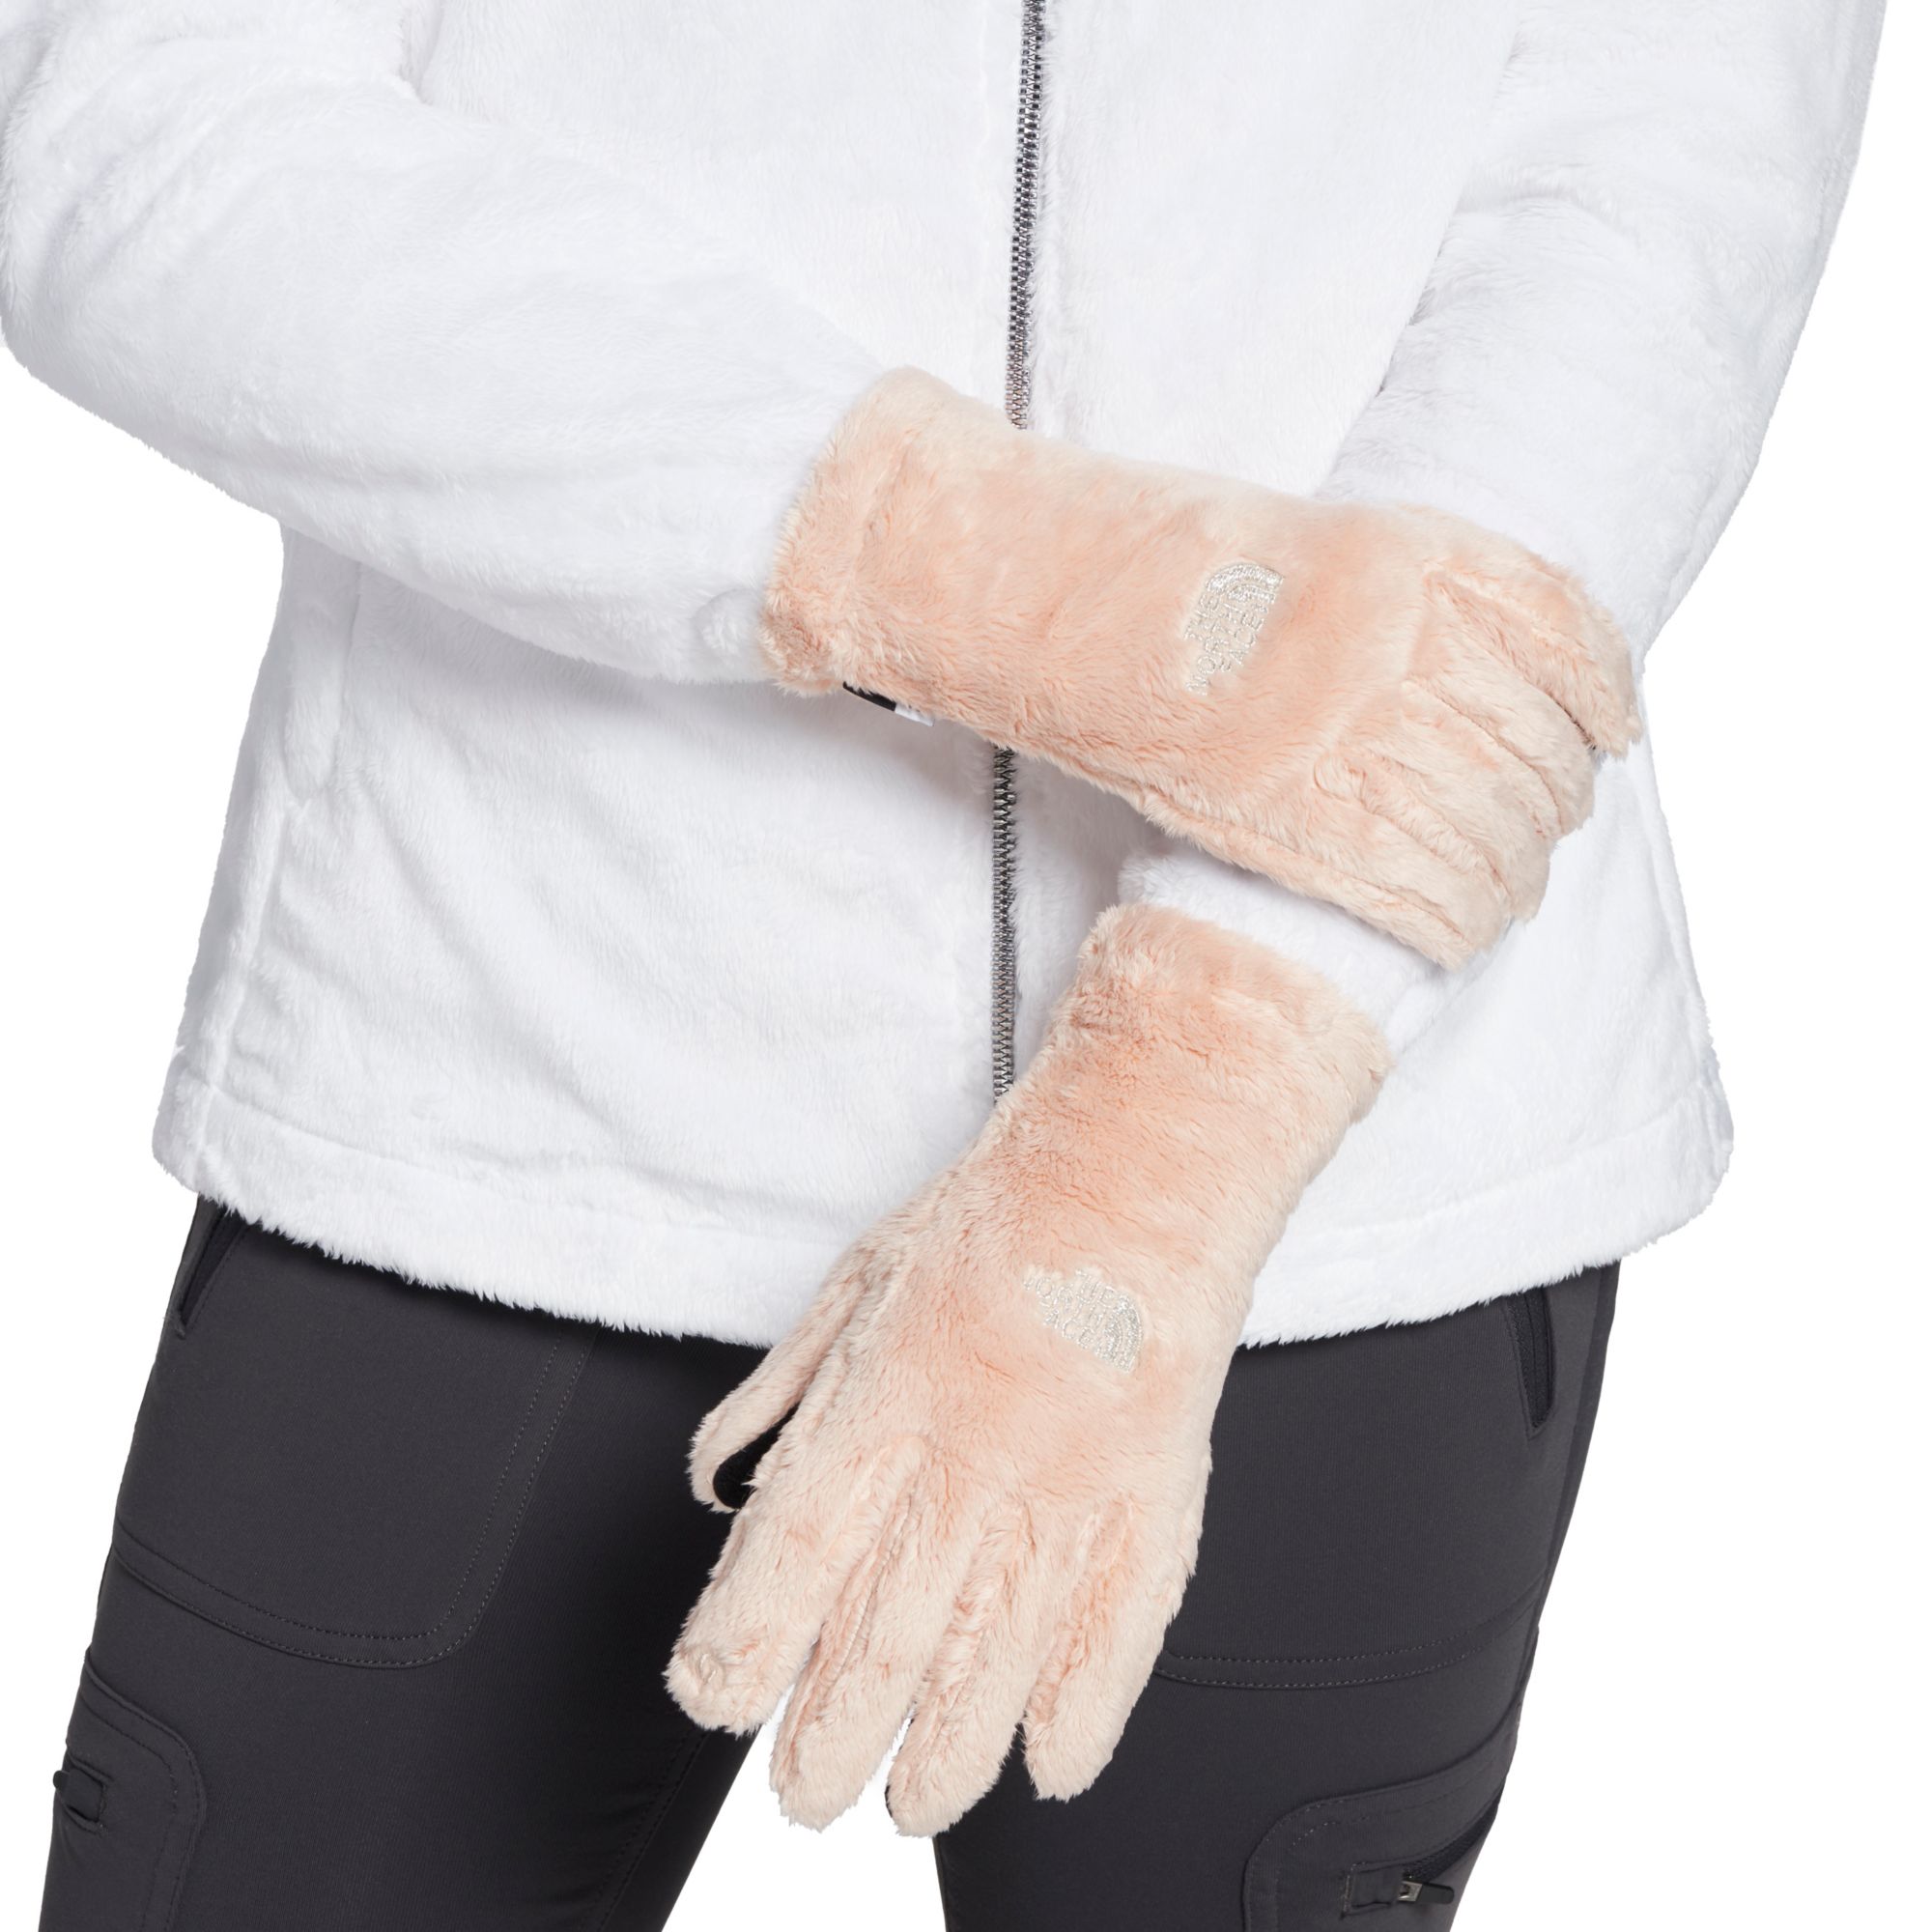 osito etip glove